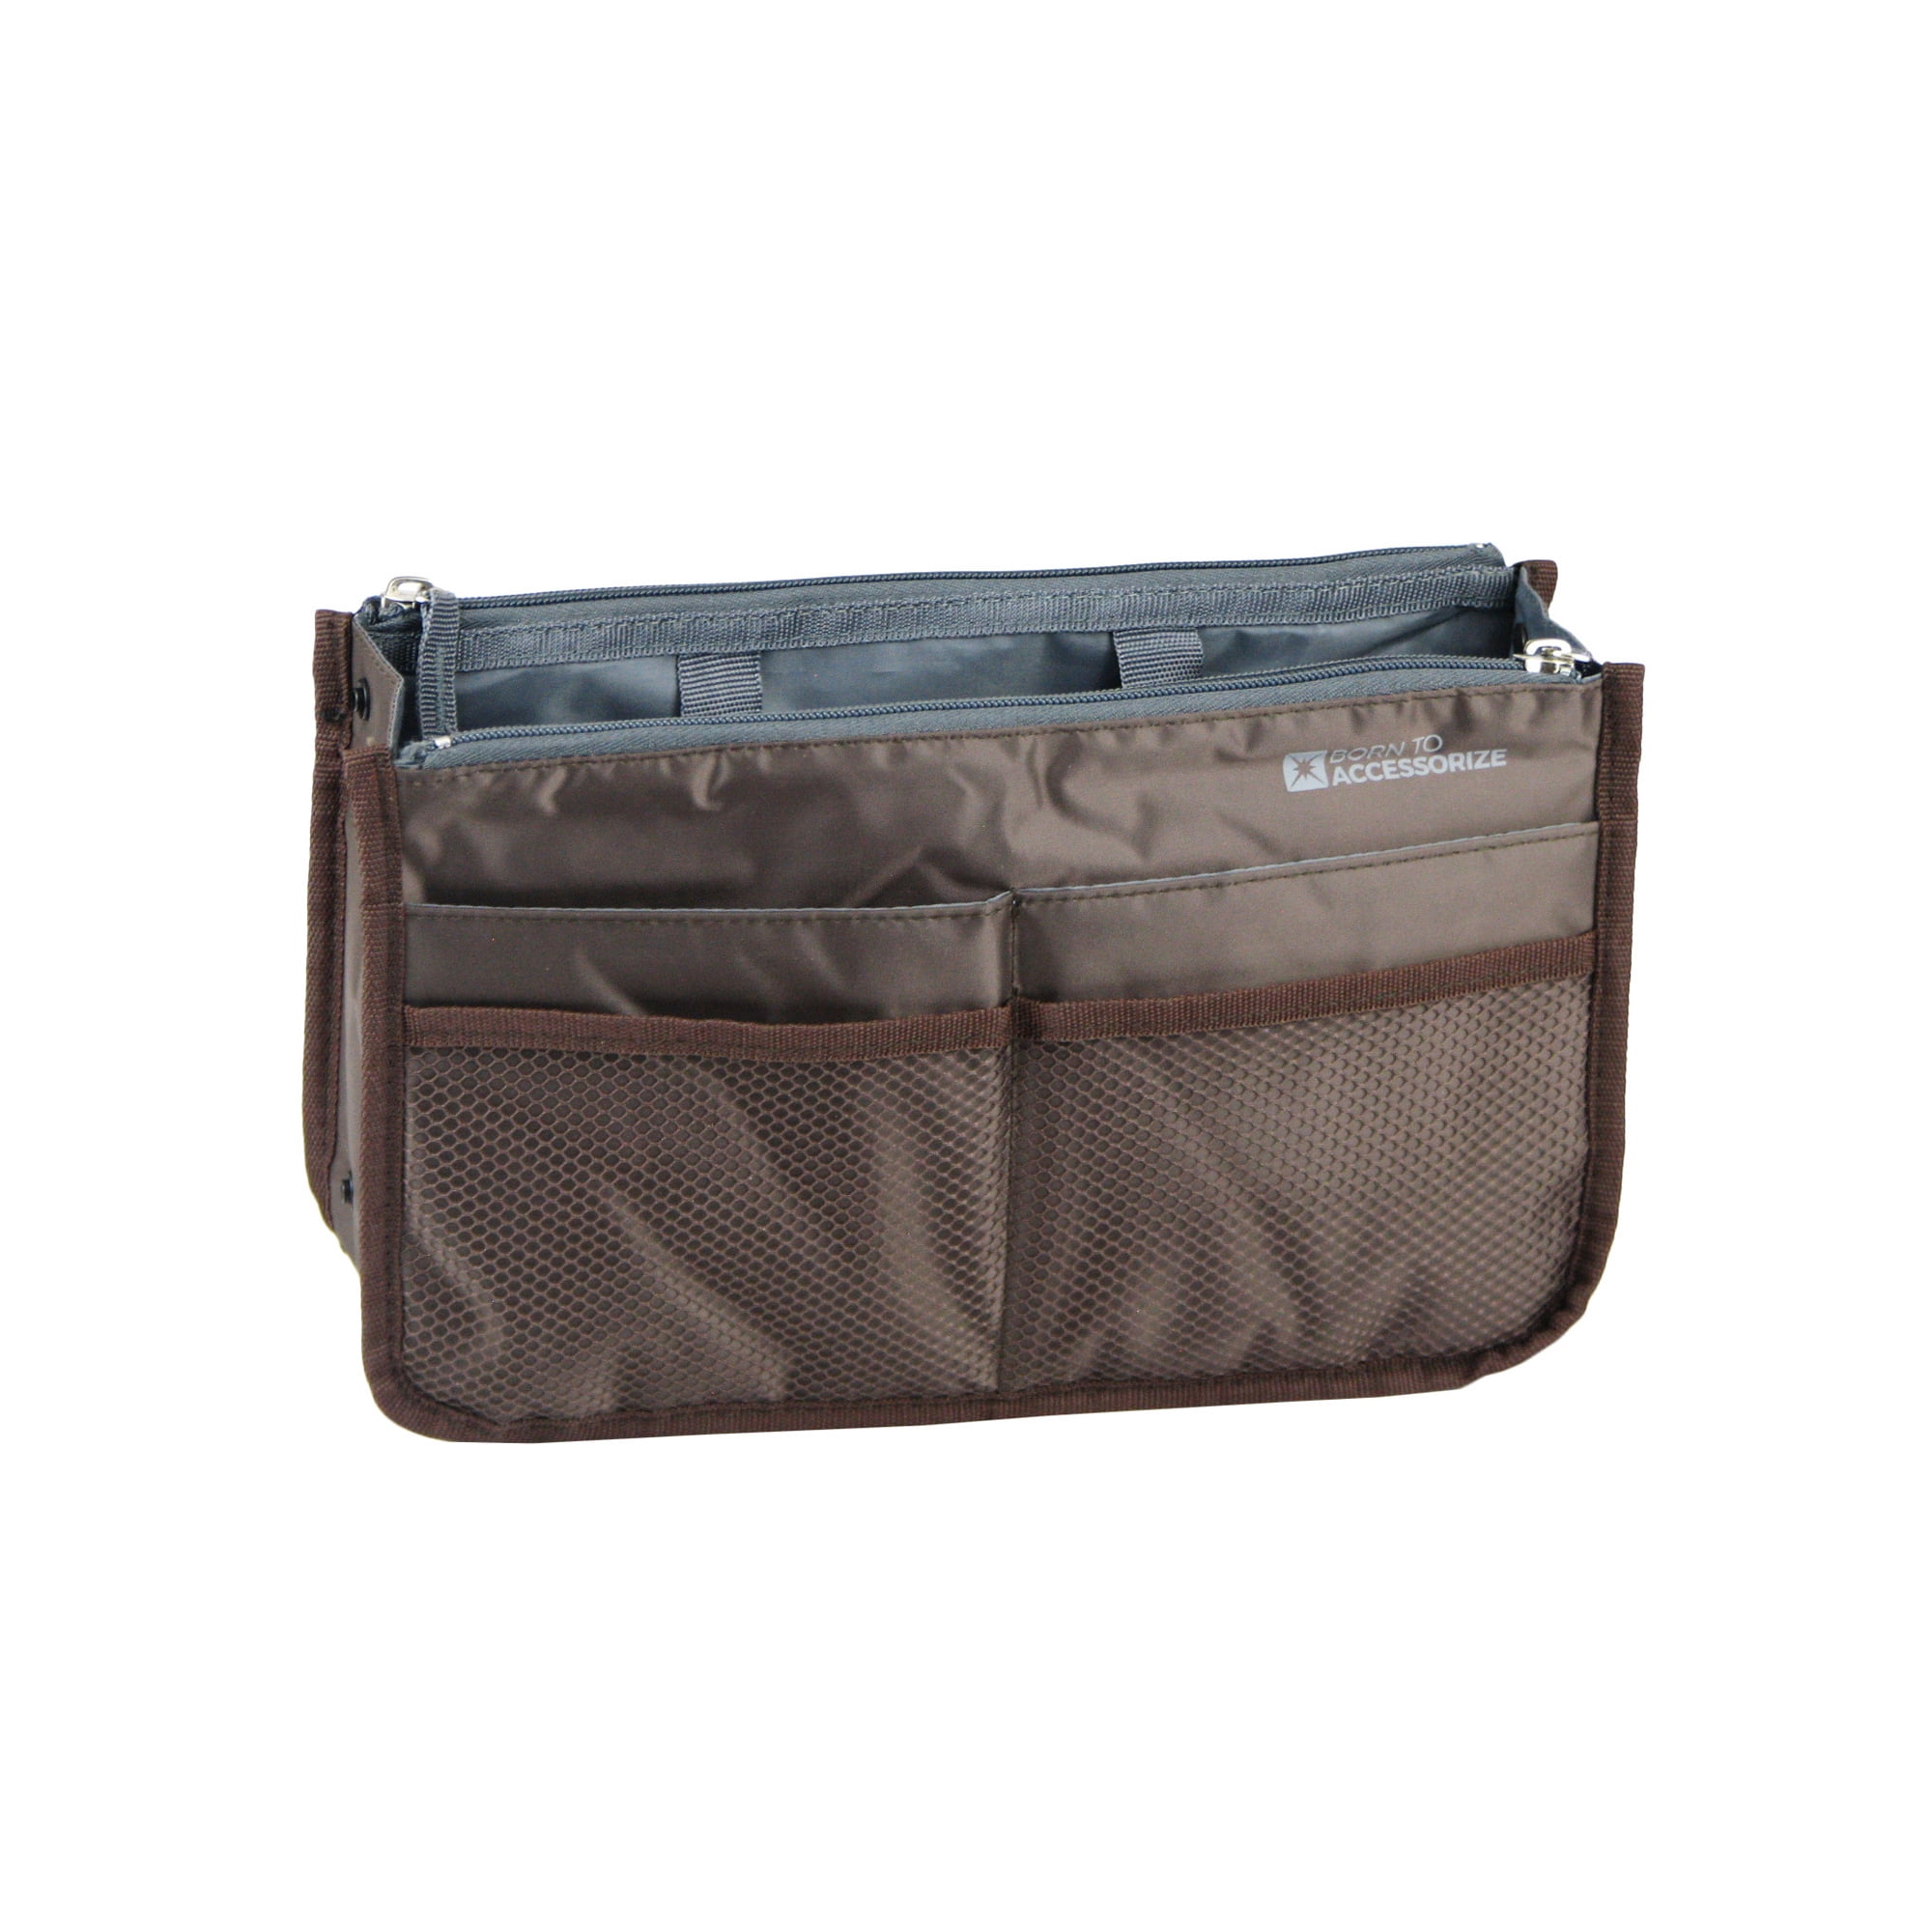 Premium Purse Organizer - Perfect Handbag Organizer Insert to Keep